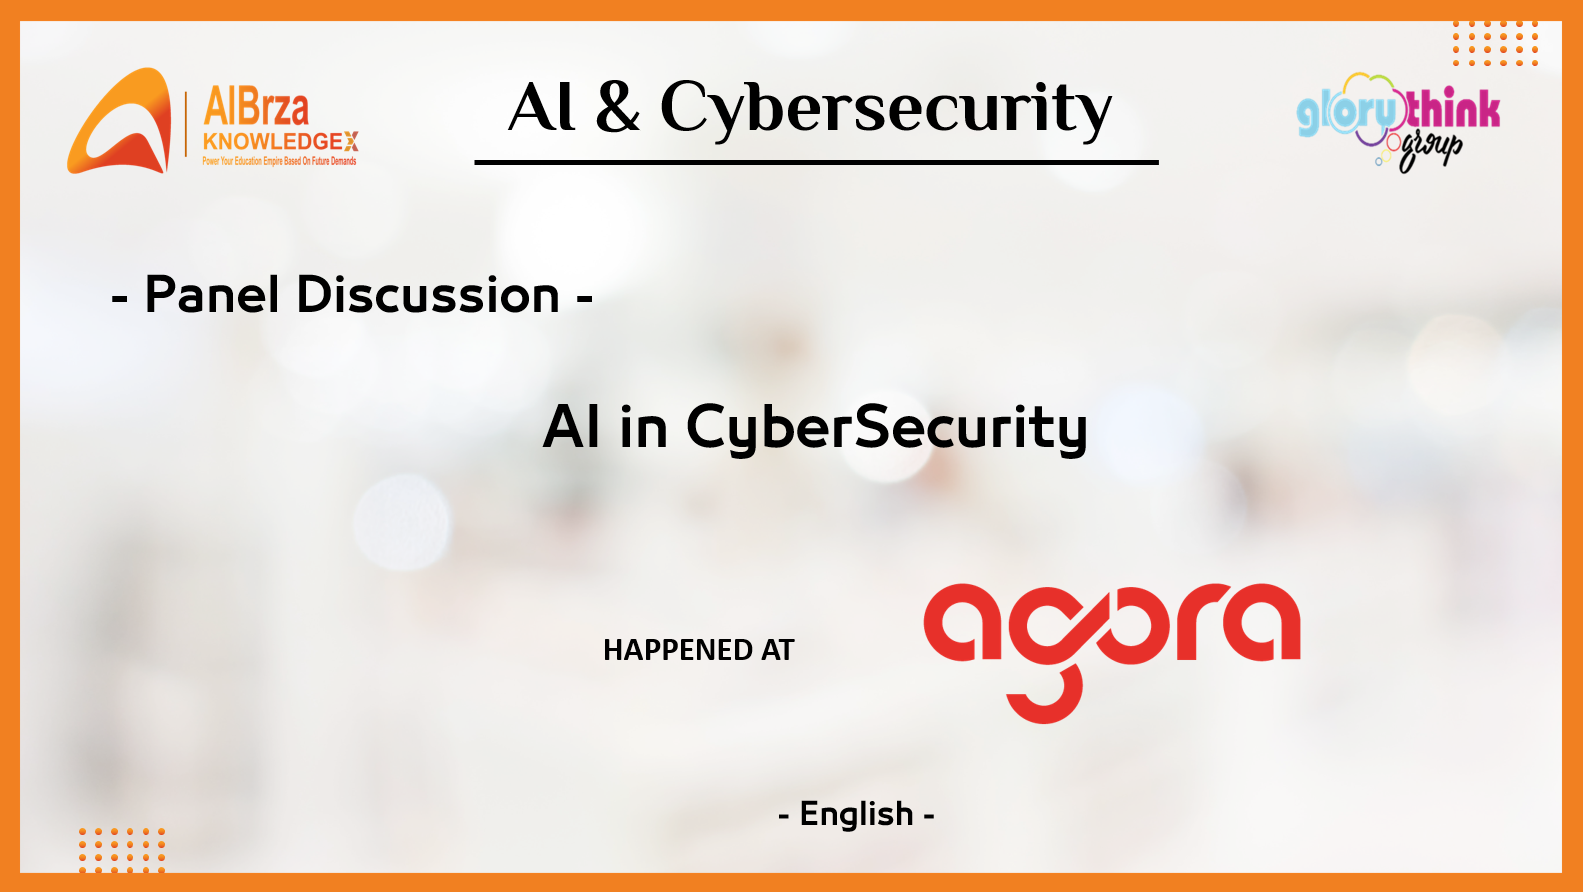 AI in CyberSecurity